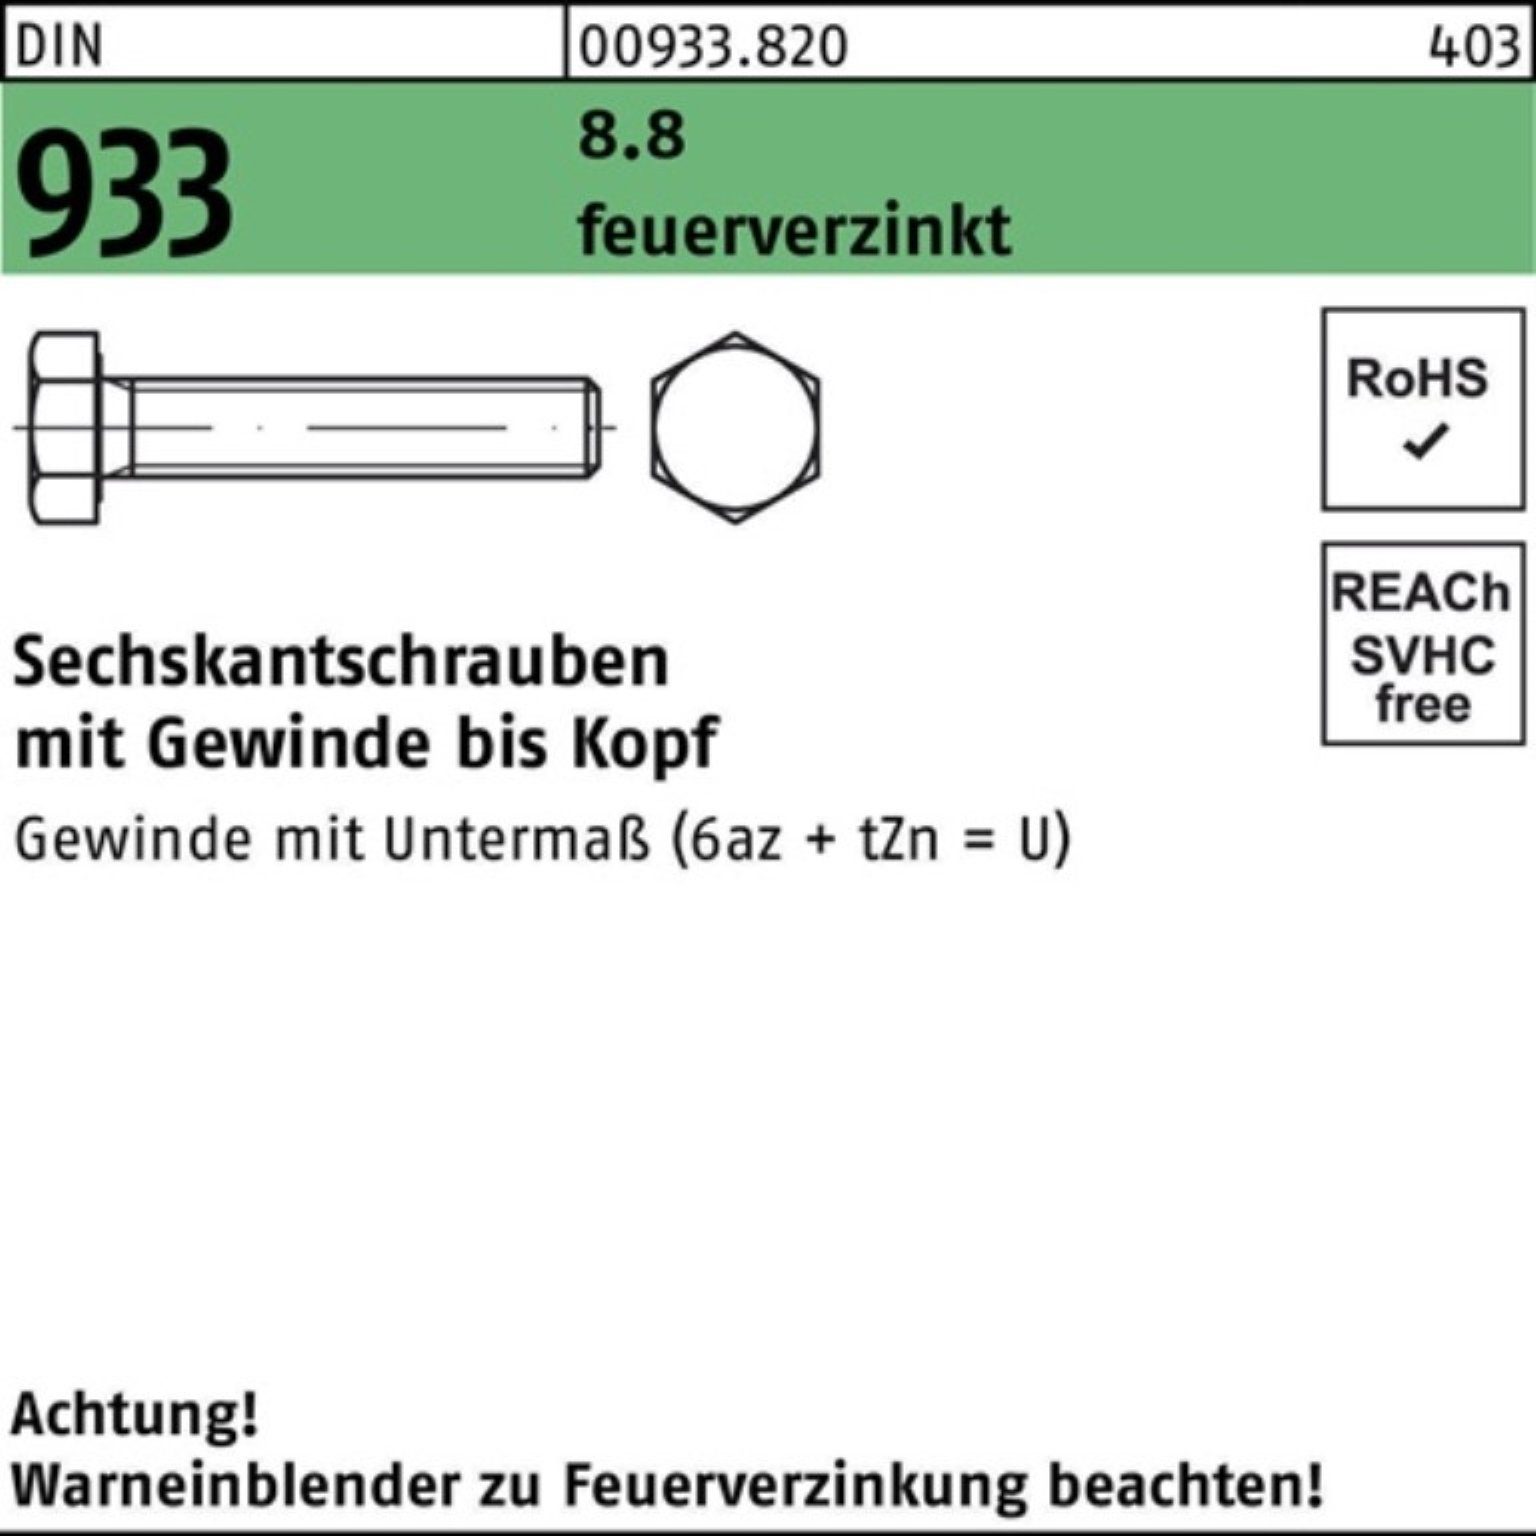 Sechskantschraube VG Sechskantschraube 200er feuerverz. 8.8 933 Stü DIN M8x Pack Reyher 200 20